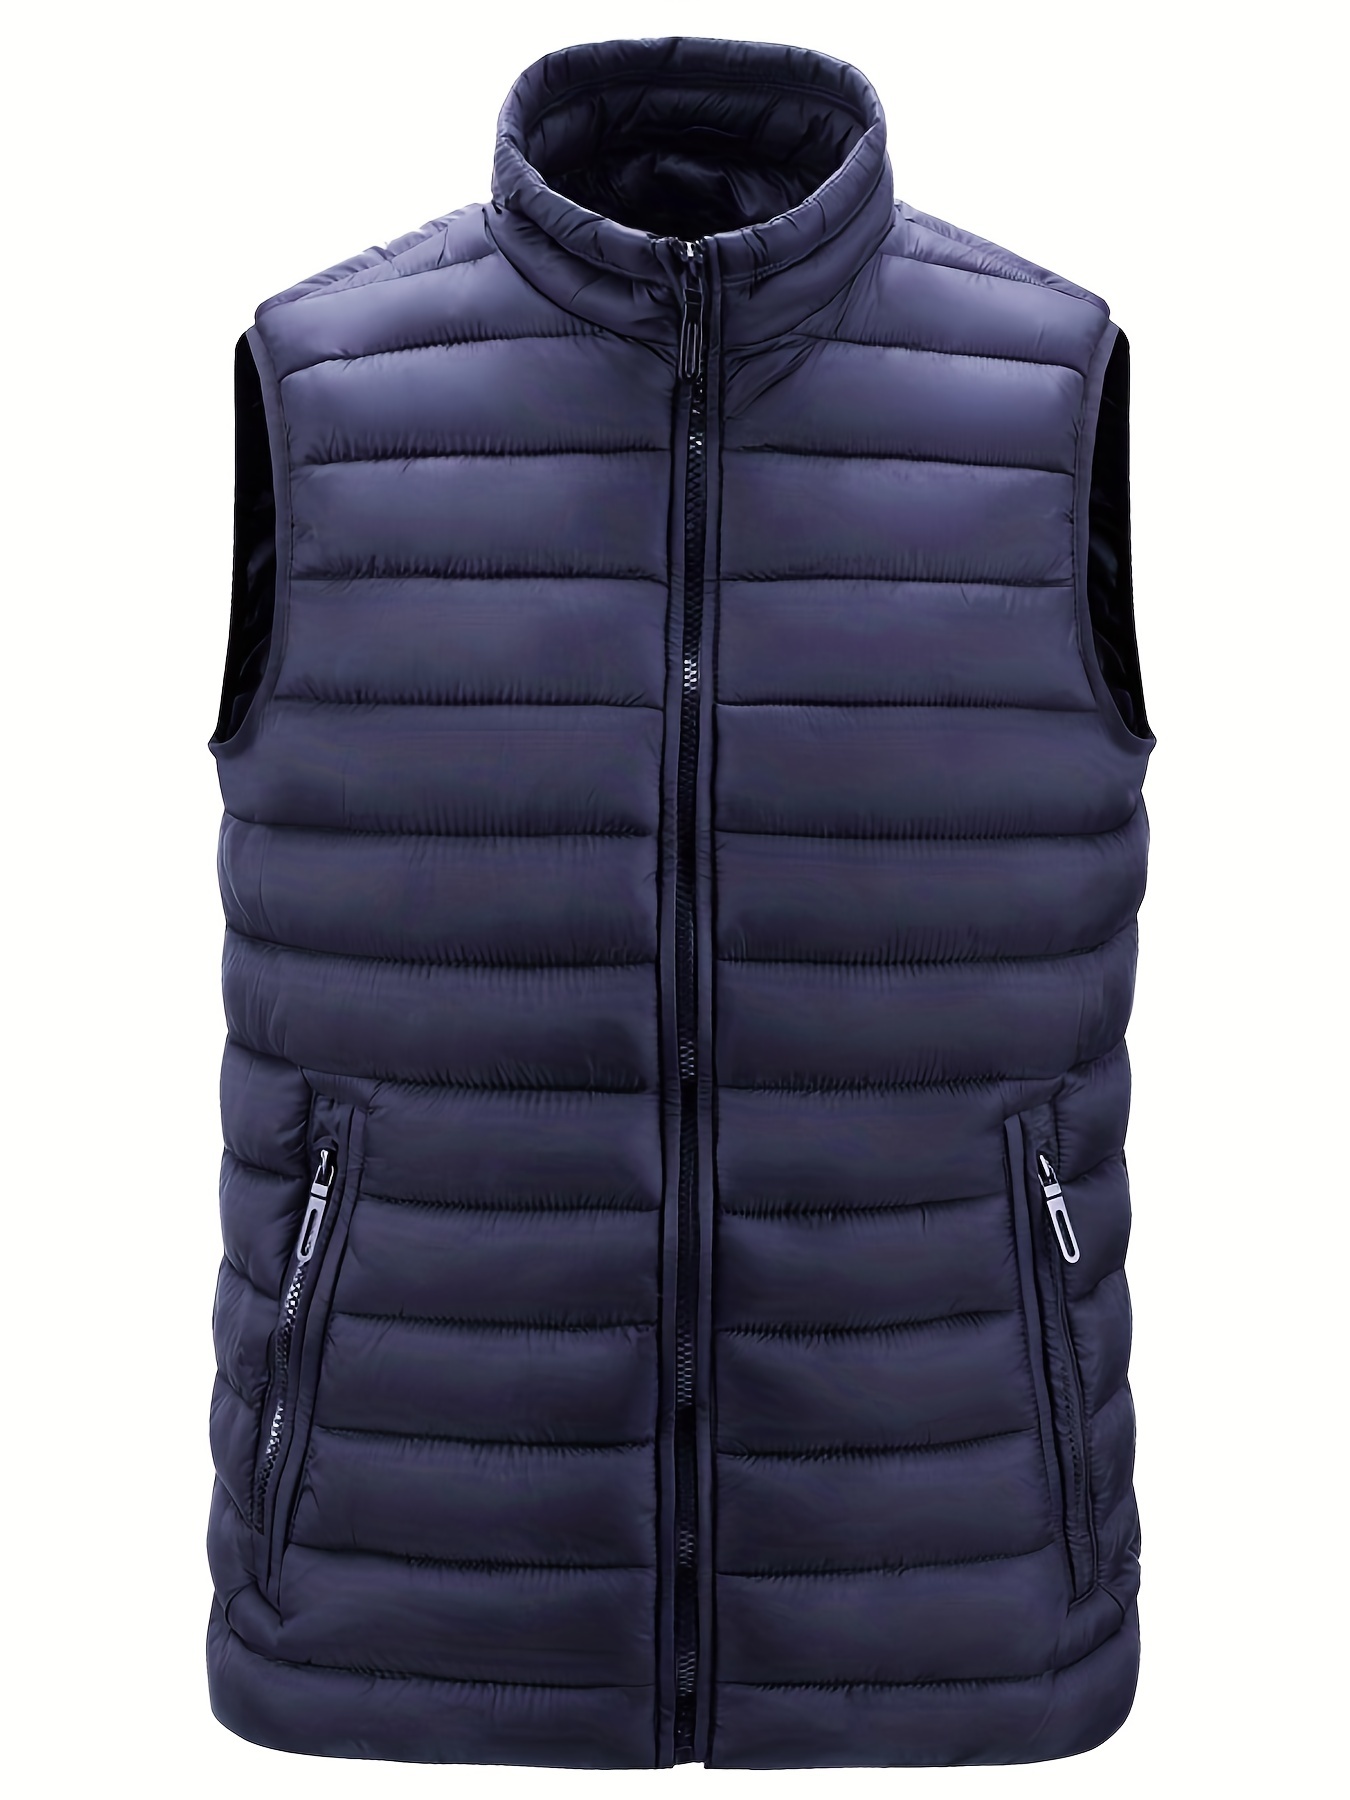 Men's Puffer Vest Sleeveless Lightweight Winter Coats Warm Puffer Jacket  Outdoor Quilted Warm Winter Puffy Vest